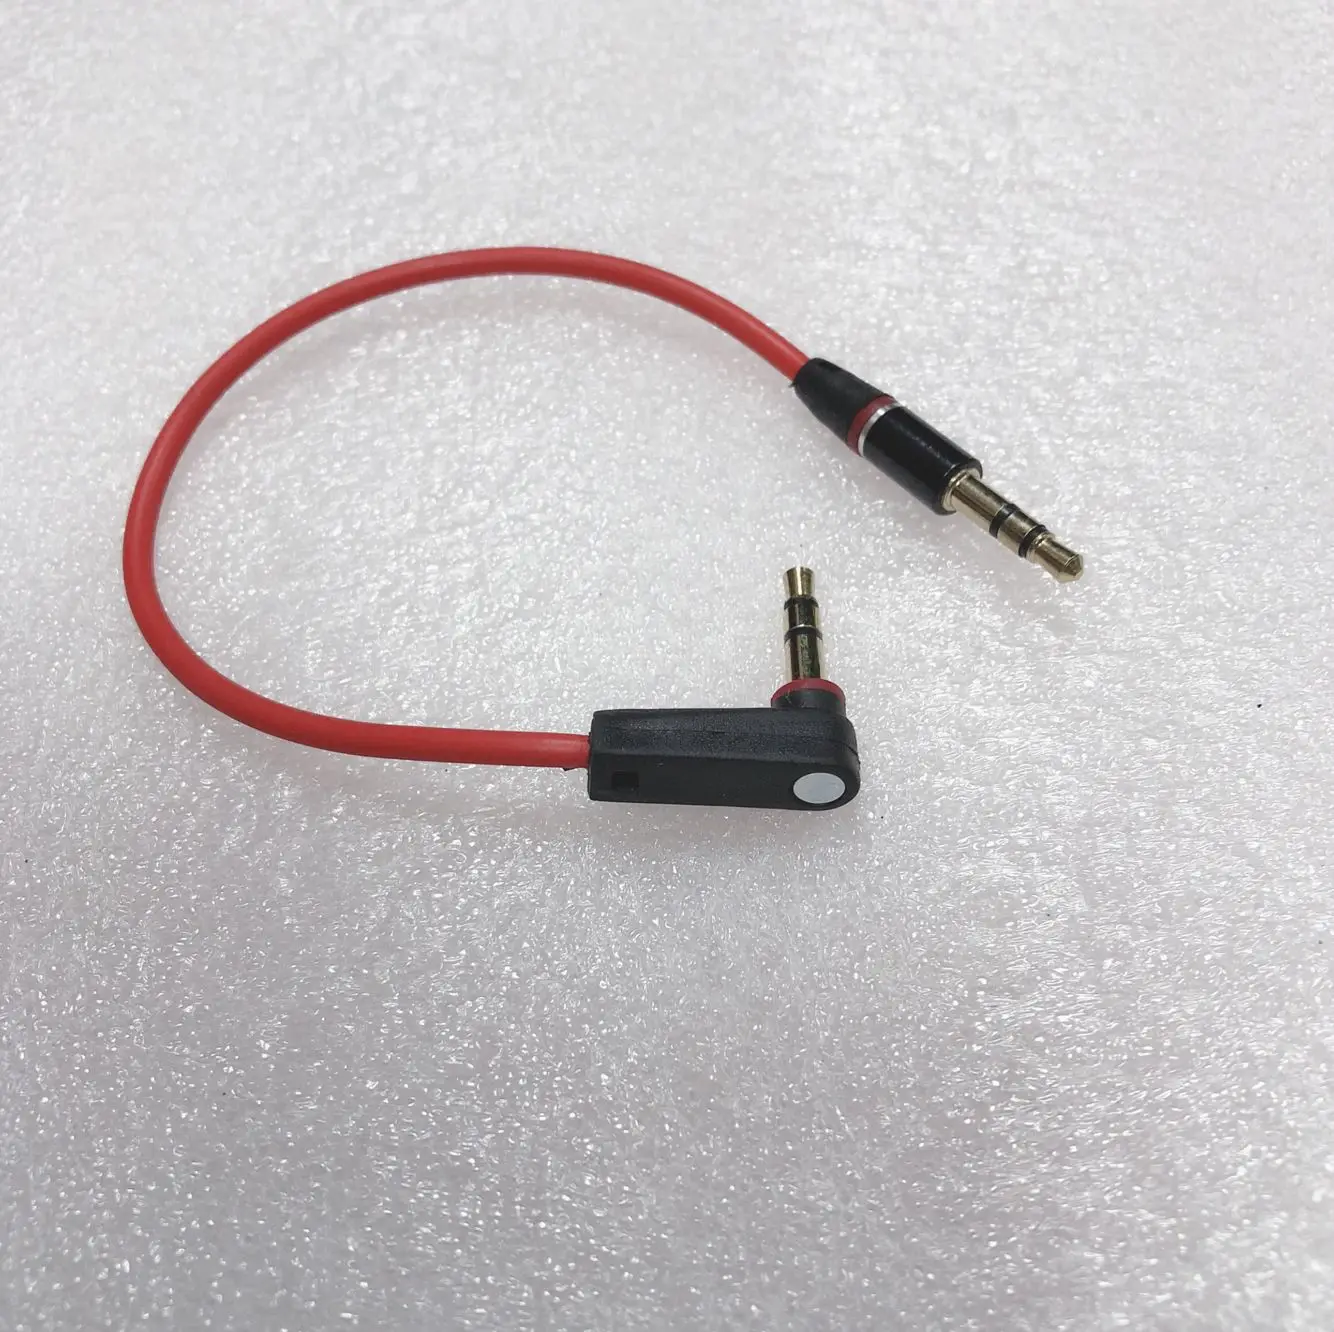 Cable Adaptador Usb Macho A Plug 3.5mm Macho Auxiliar 20cm